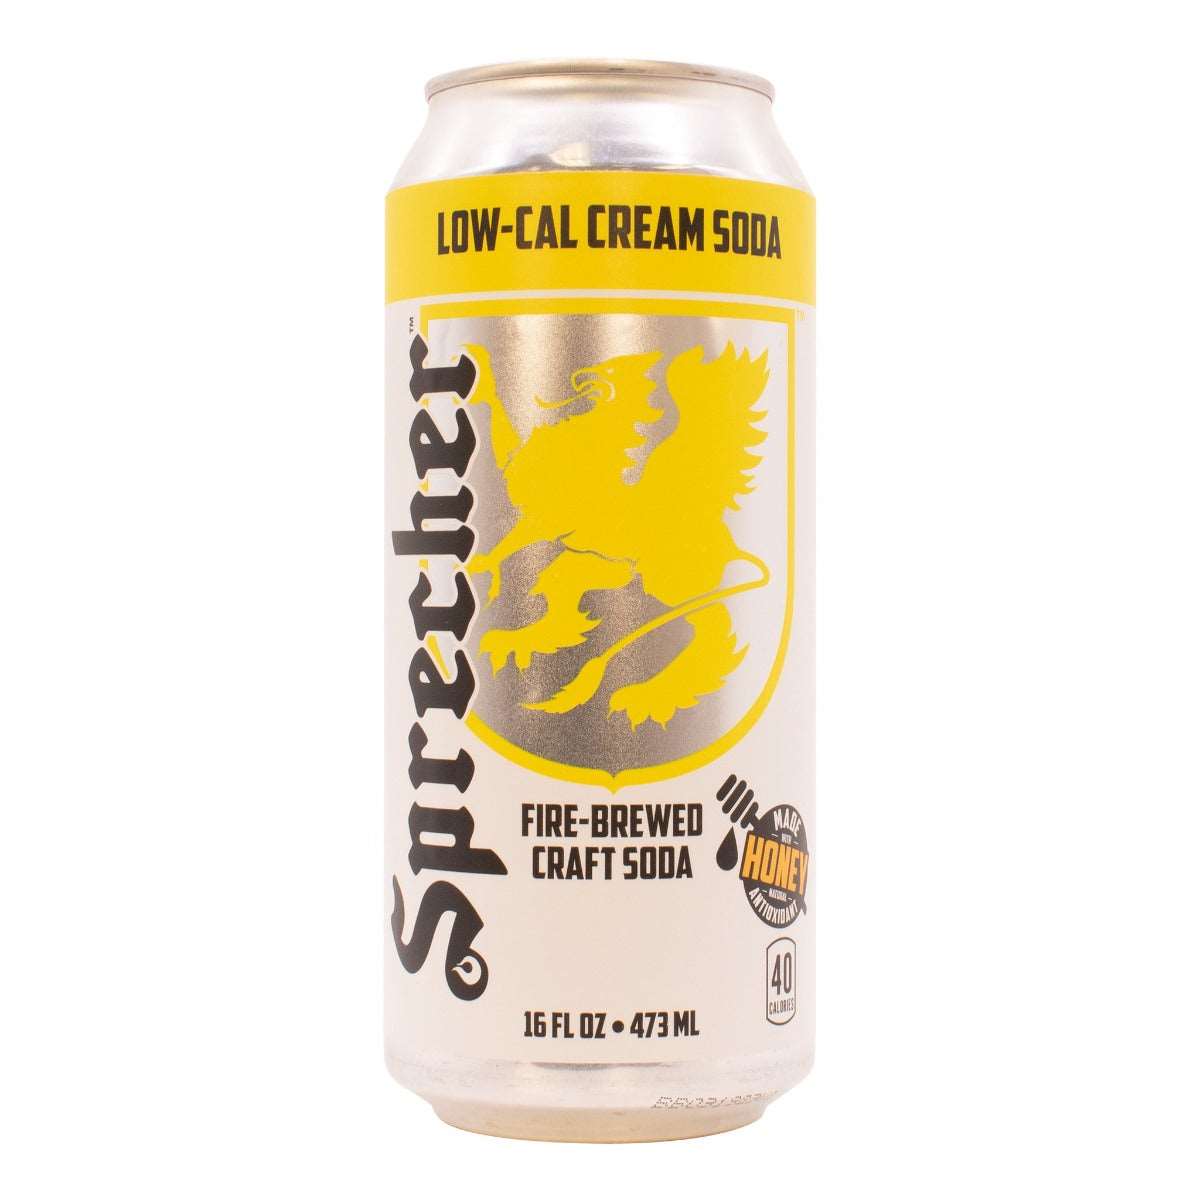 A 16oz can of Sprecher Lo-Cal Cream Soda